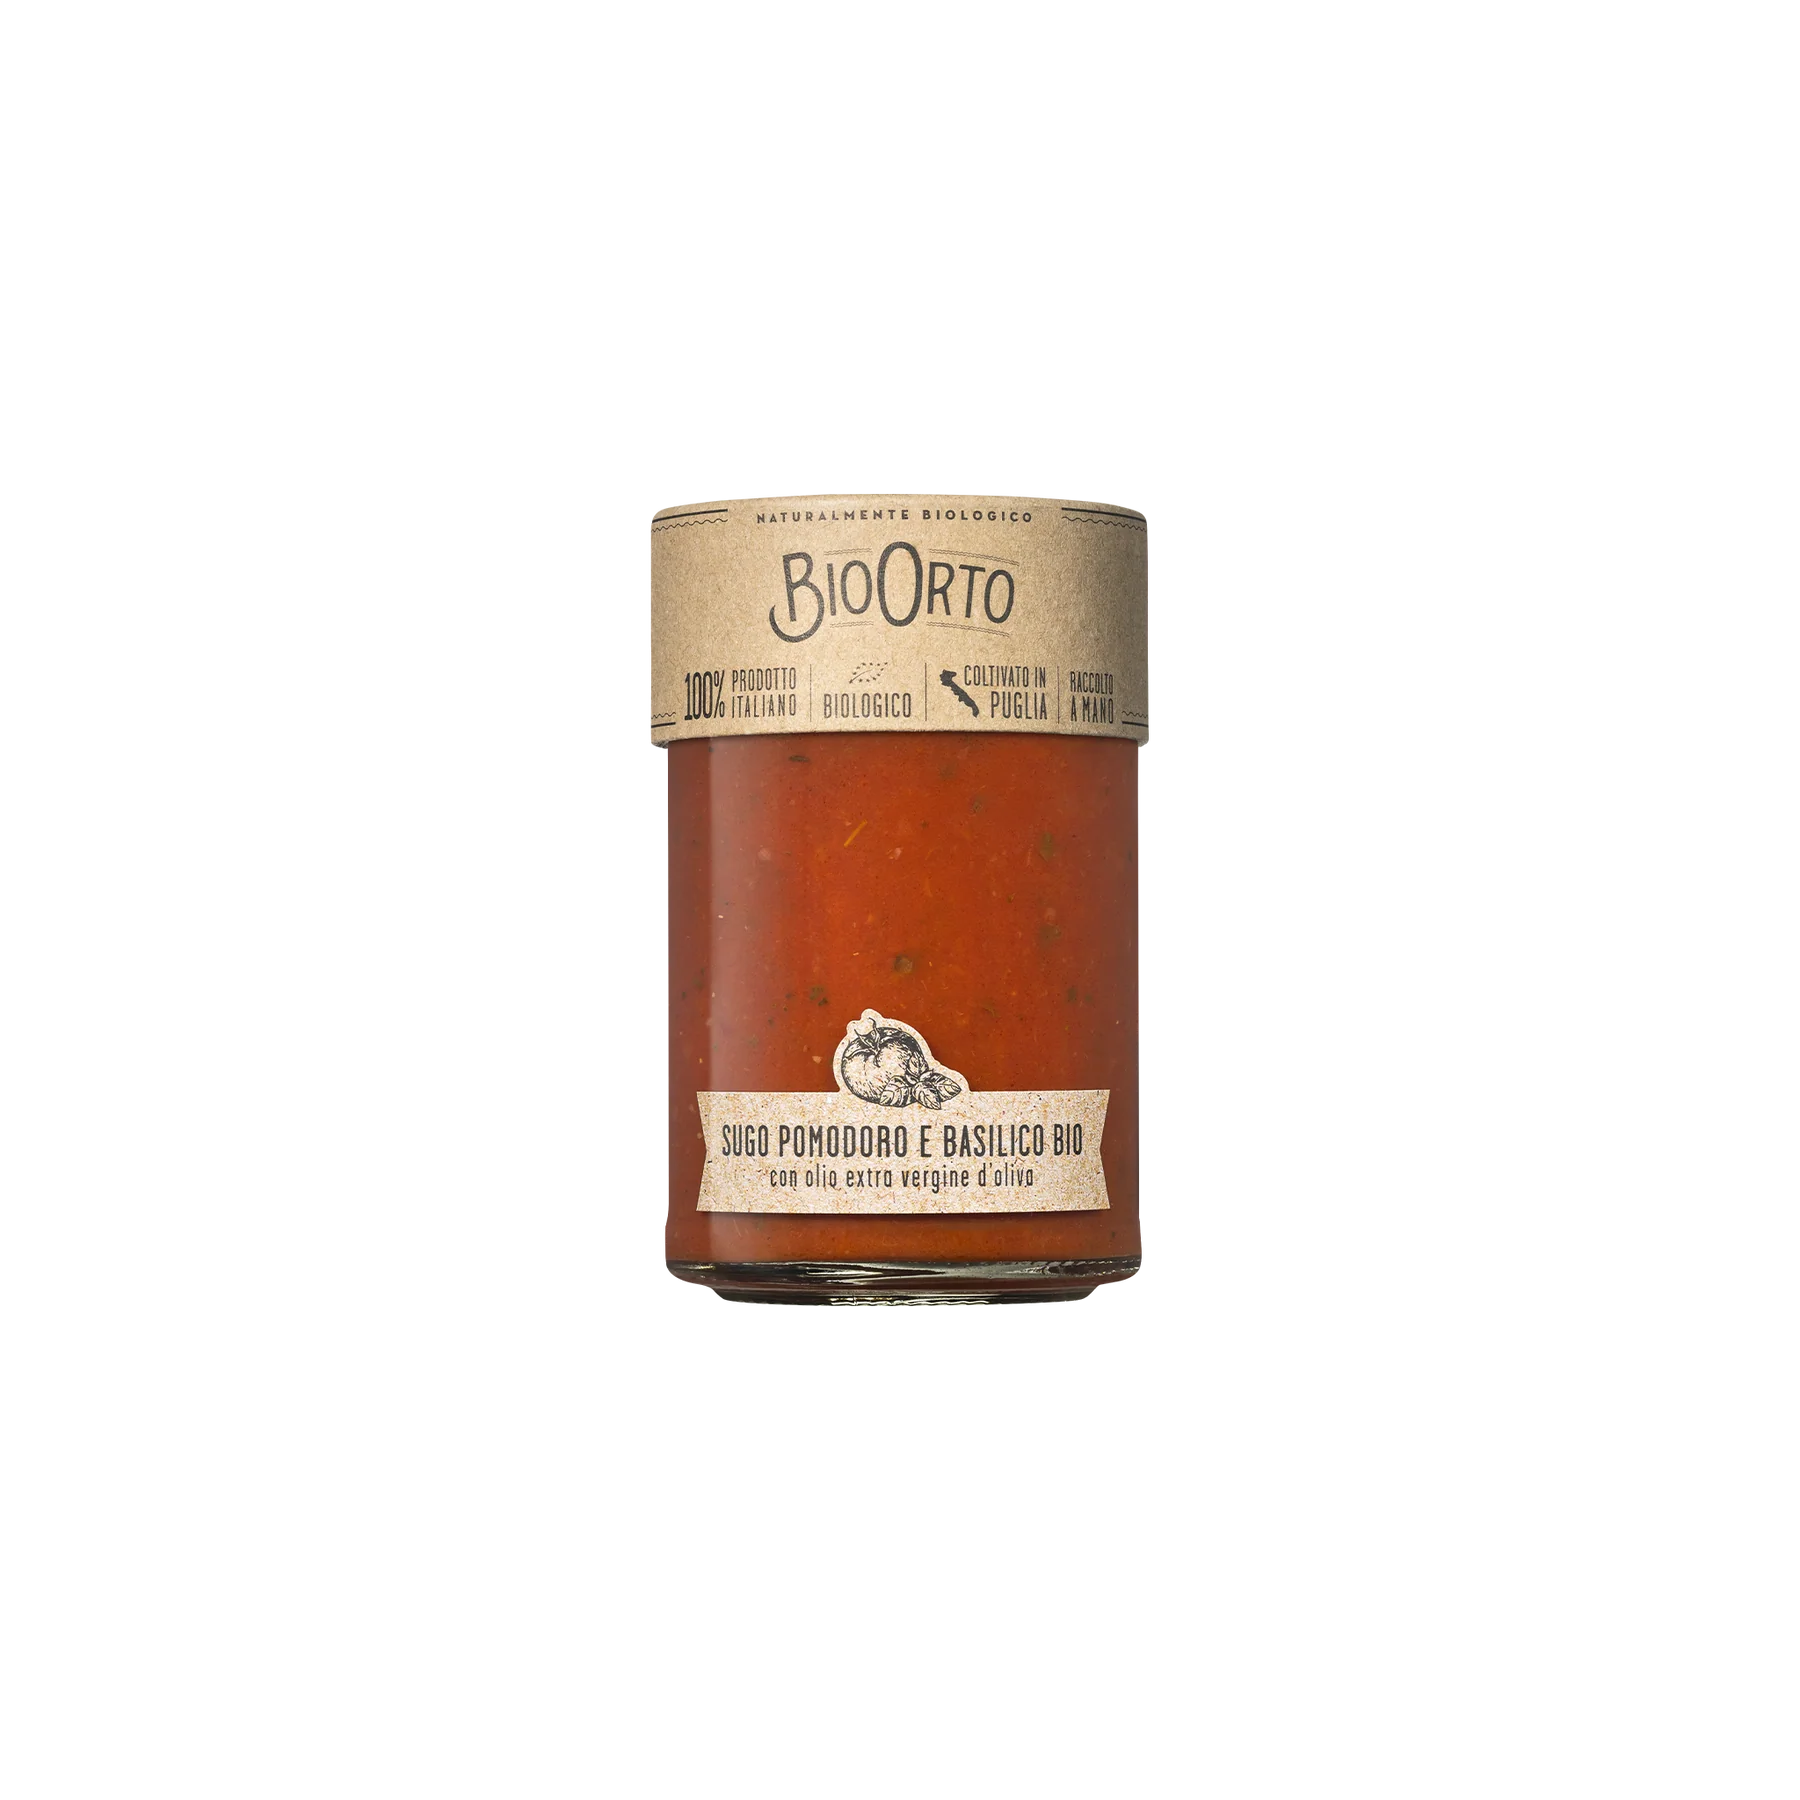 Tomato Sauce with Basil Organic - BIO ORTO SOC COOP (350g)